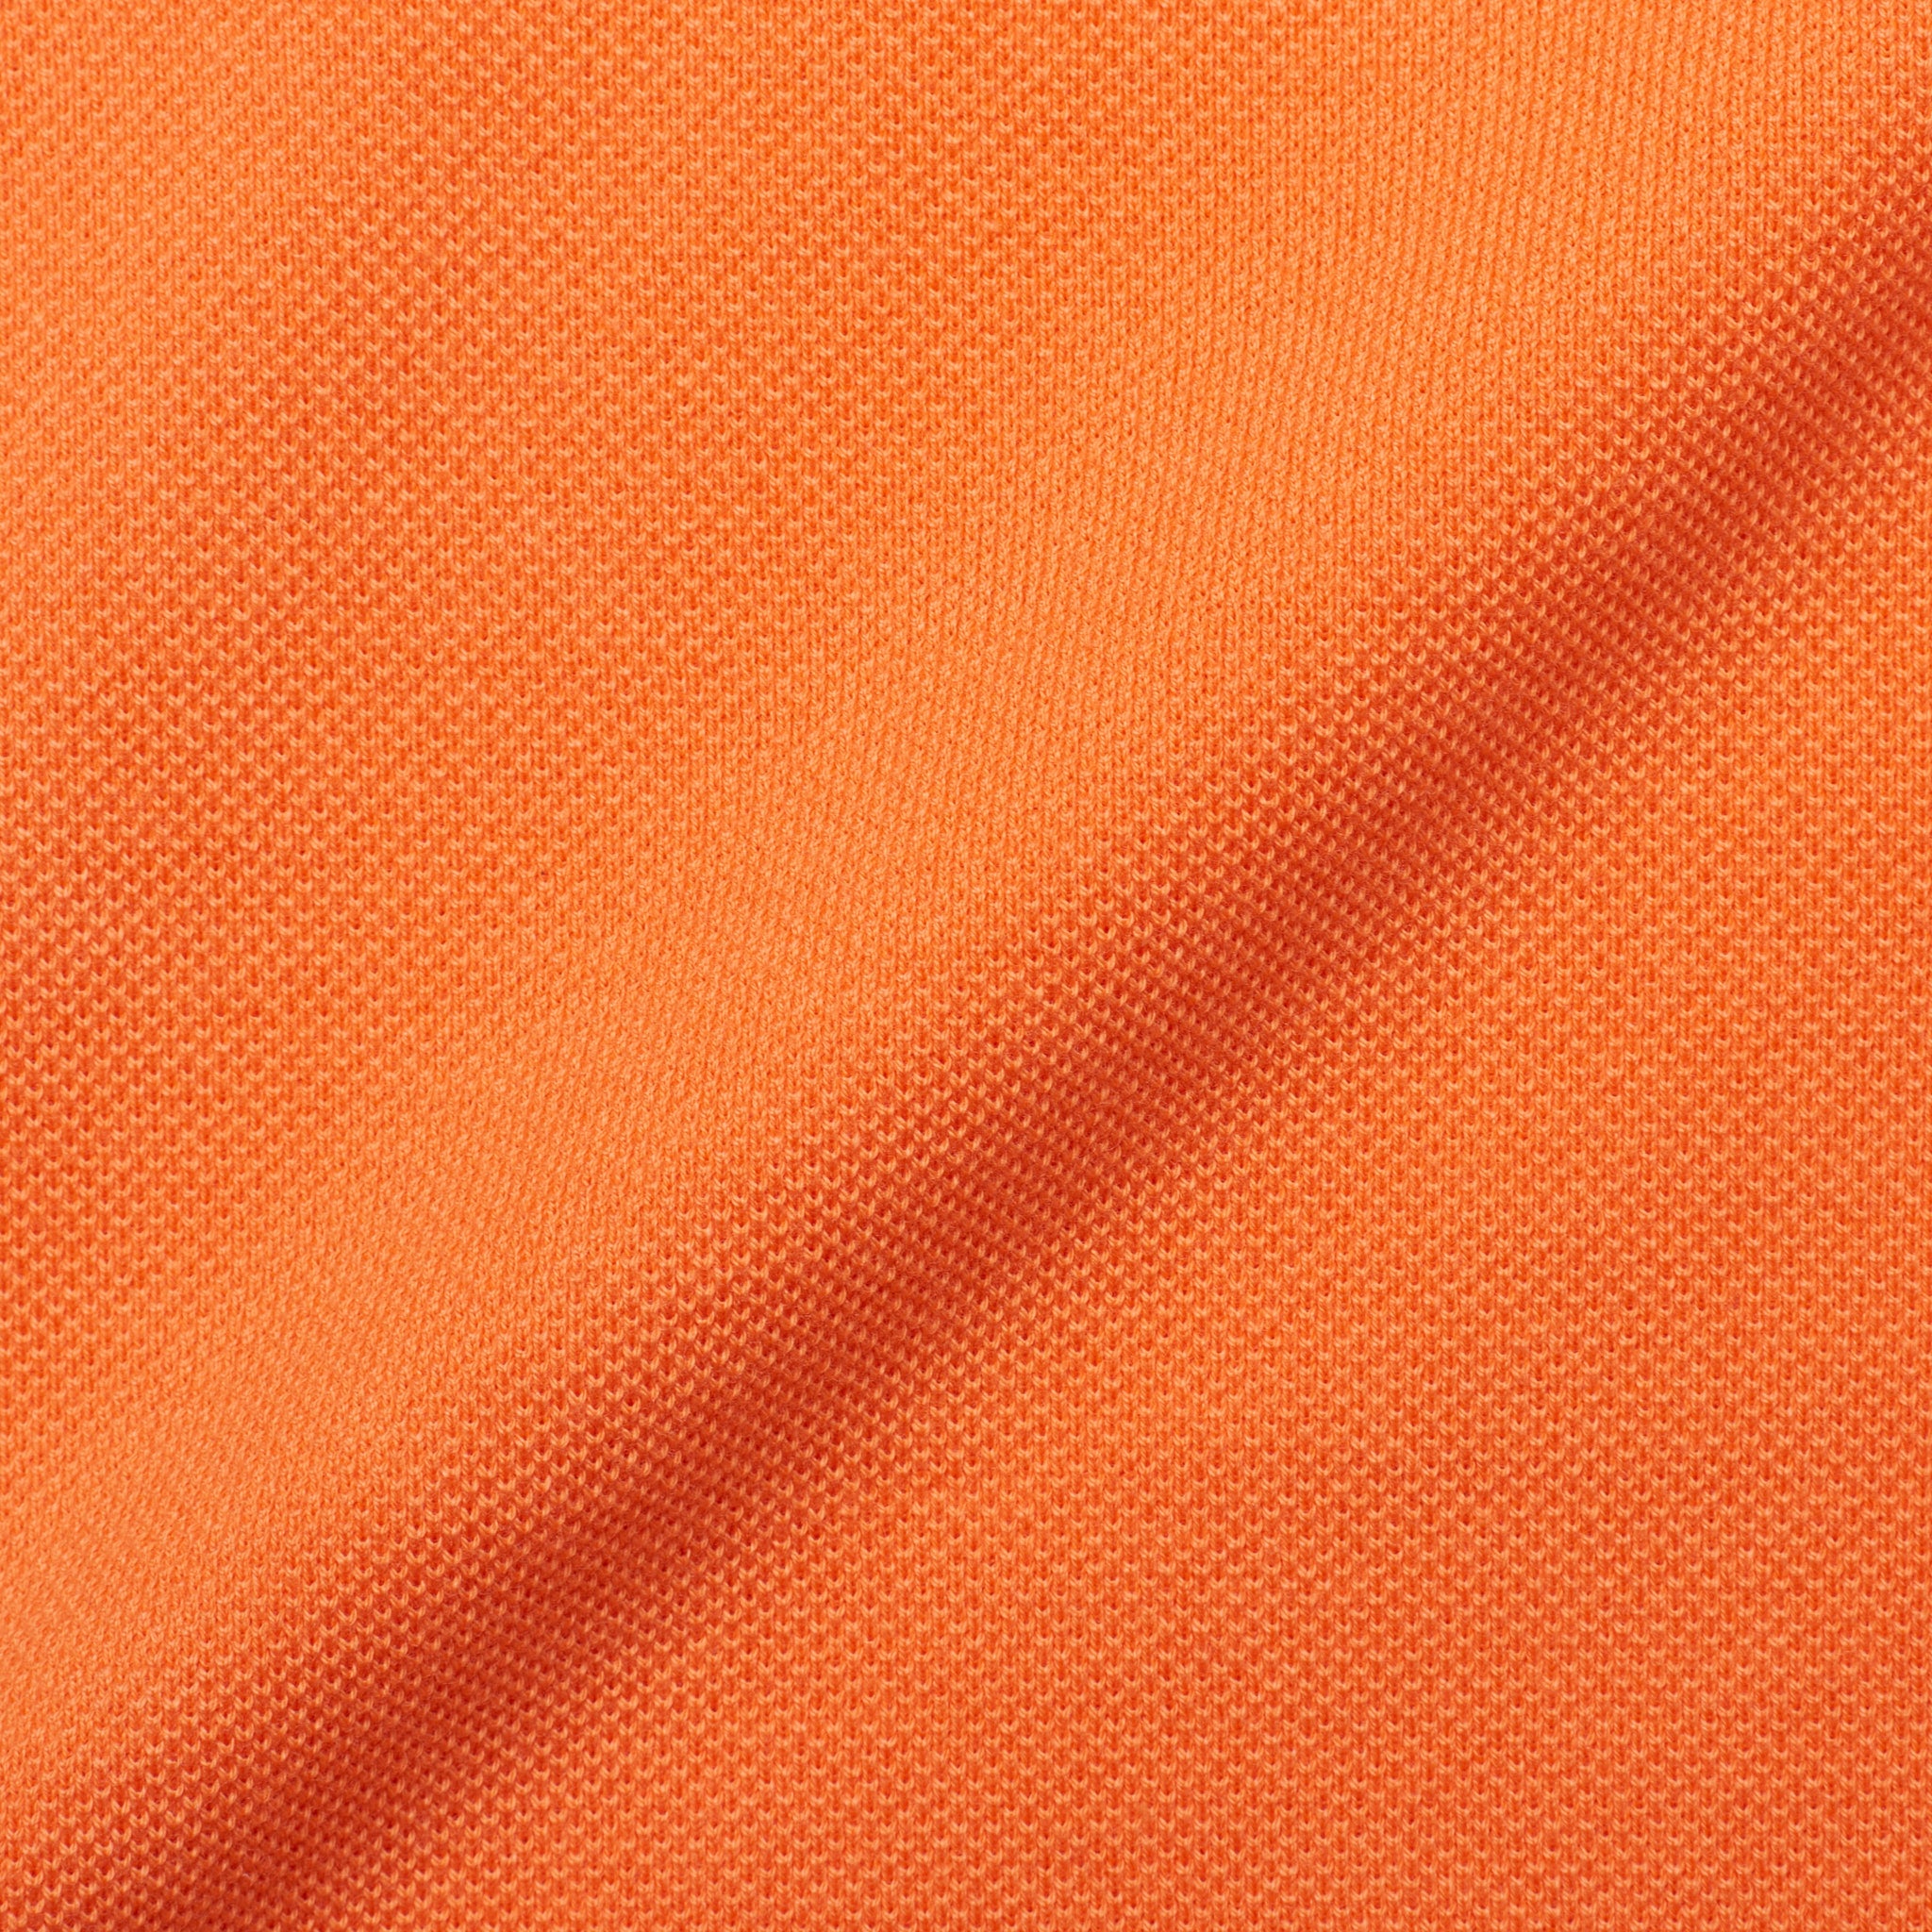 FEDELI "North" Neon Orange Cotton Pique Short Sleeve Polo Shirt EU 50 NEW US M FEDELI